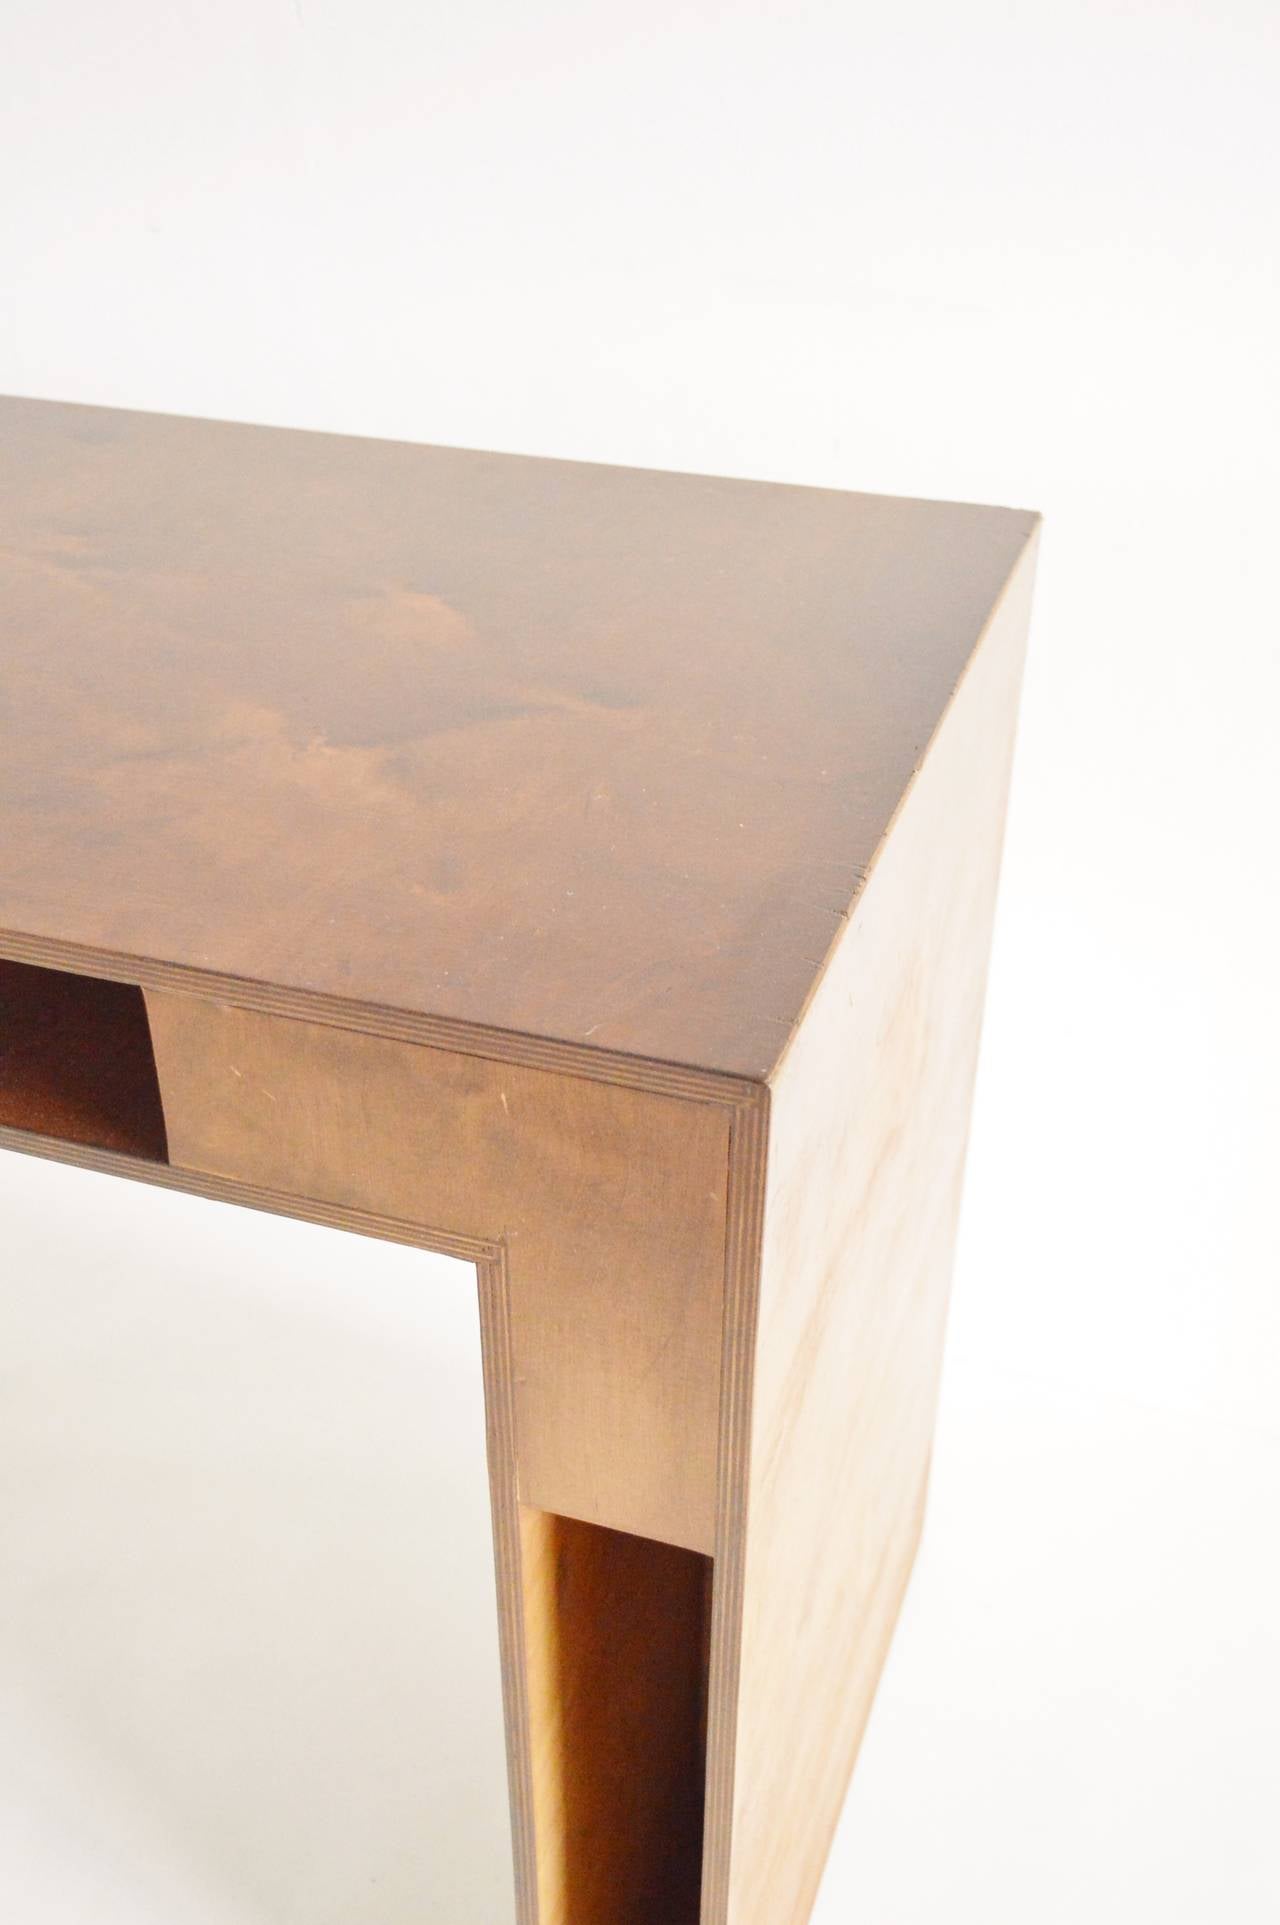 Belgian Artist Designed Prototype Desk or Console Table